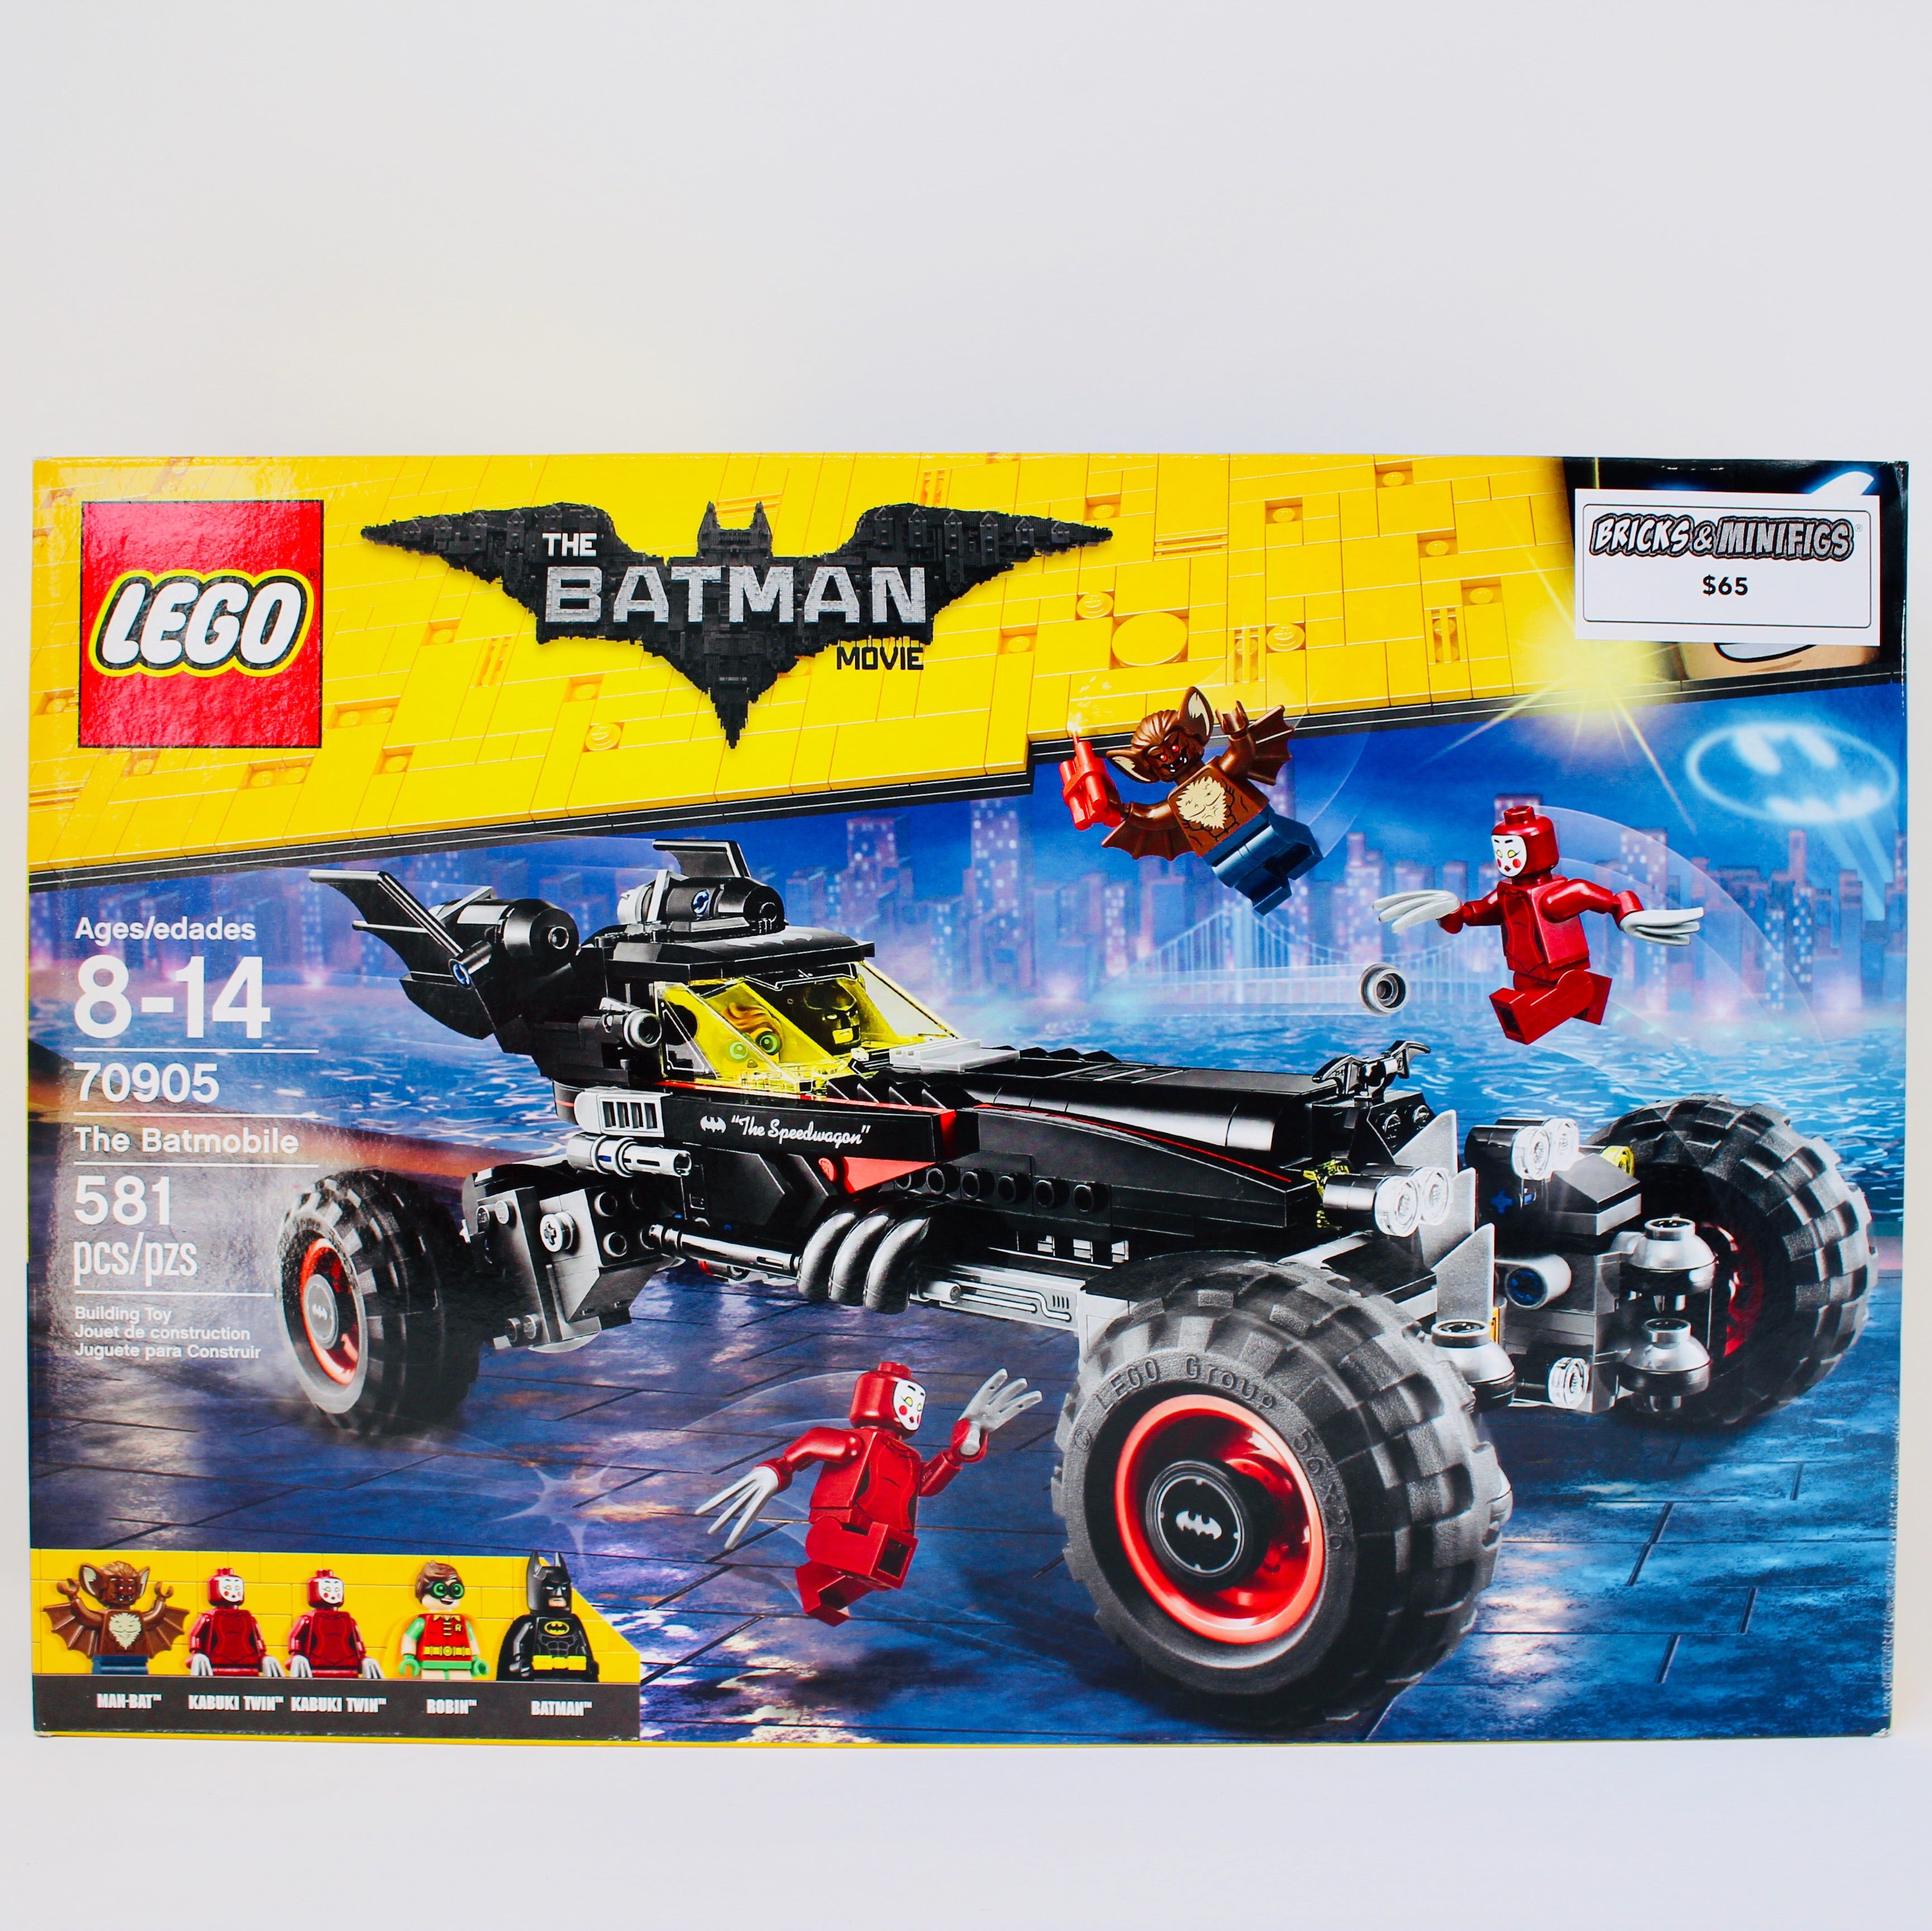 Retired Set 70905 The LEGO Batman Movie The Batmobile